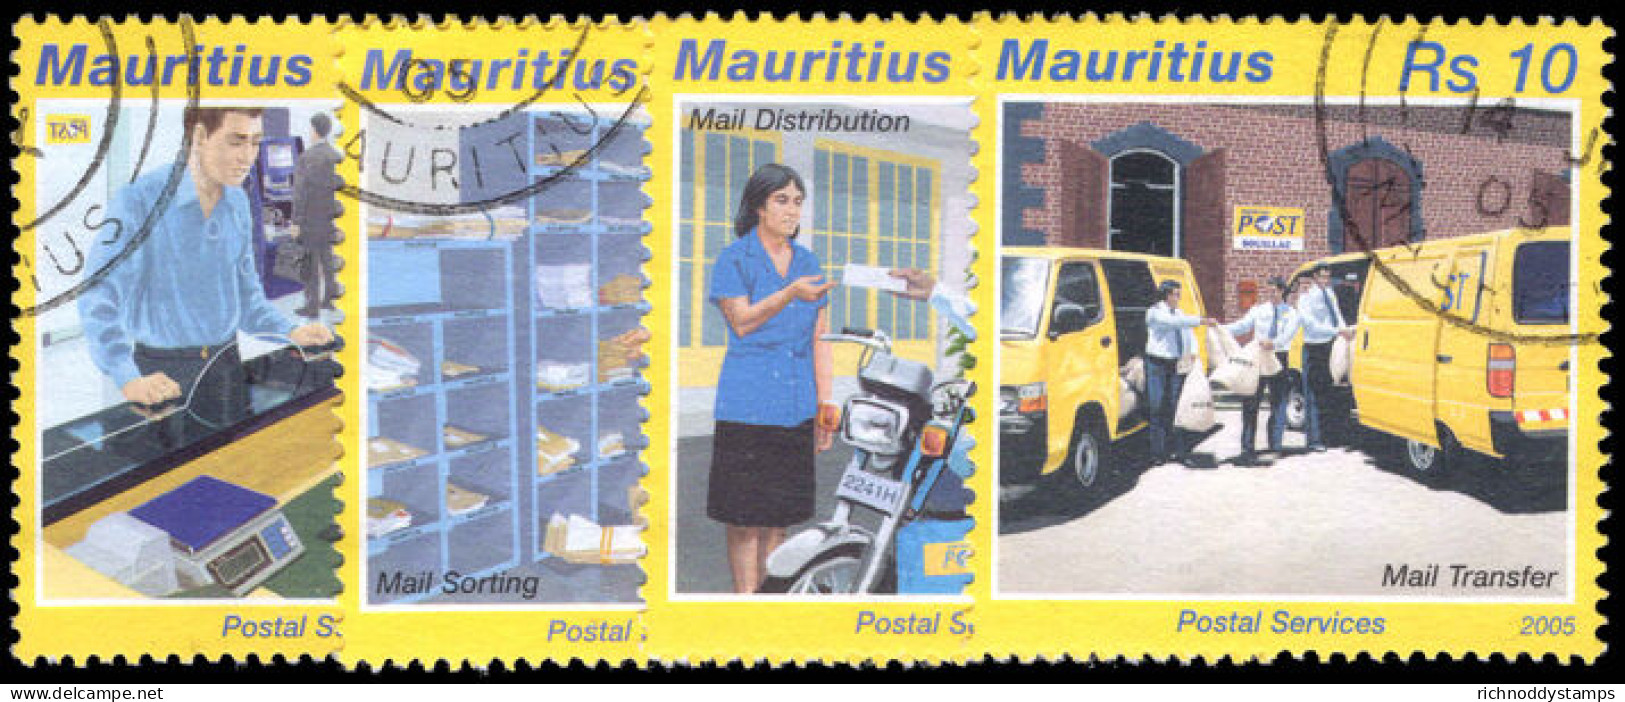 Mauritius 2005 Postal Services Fine Used. - Maurice (1968-...)